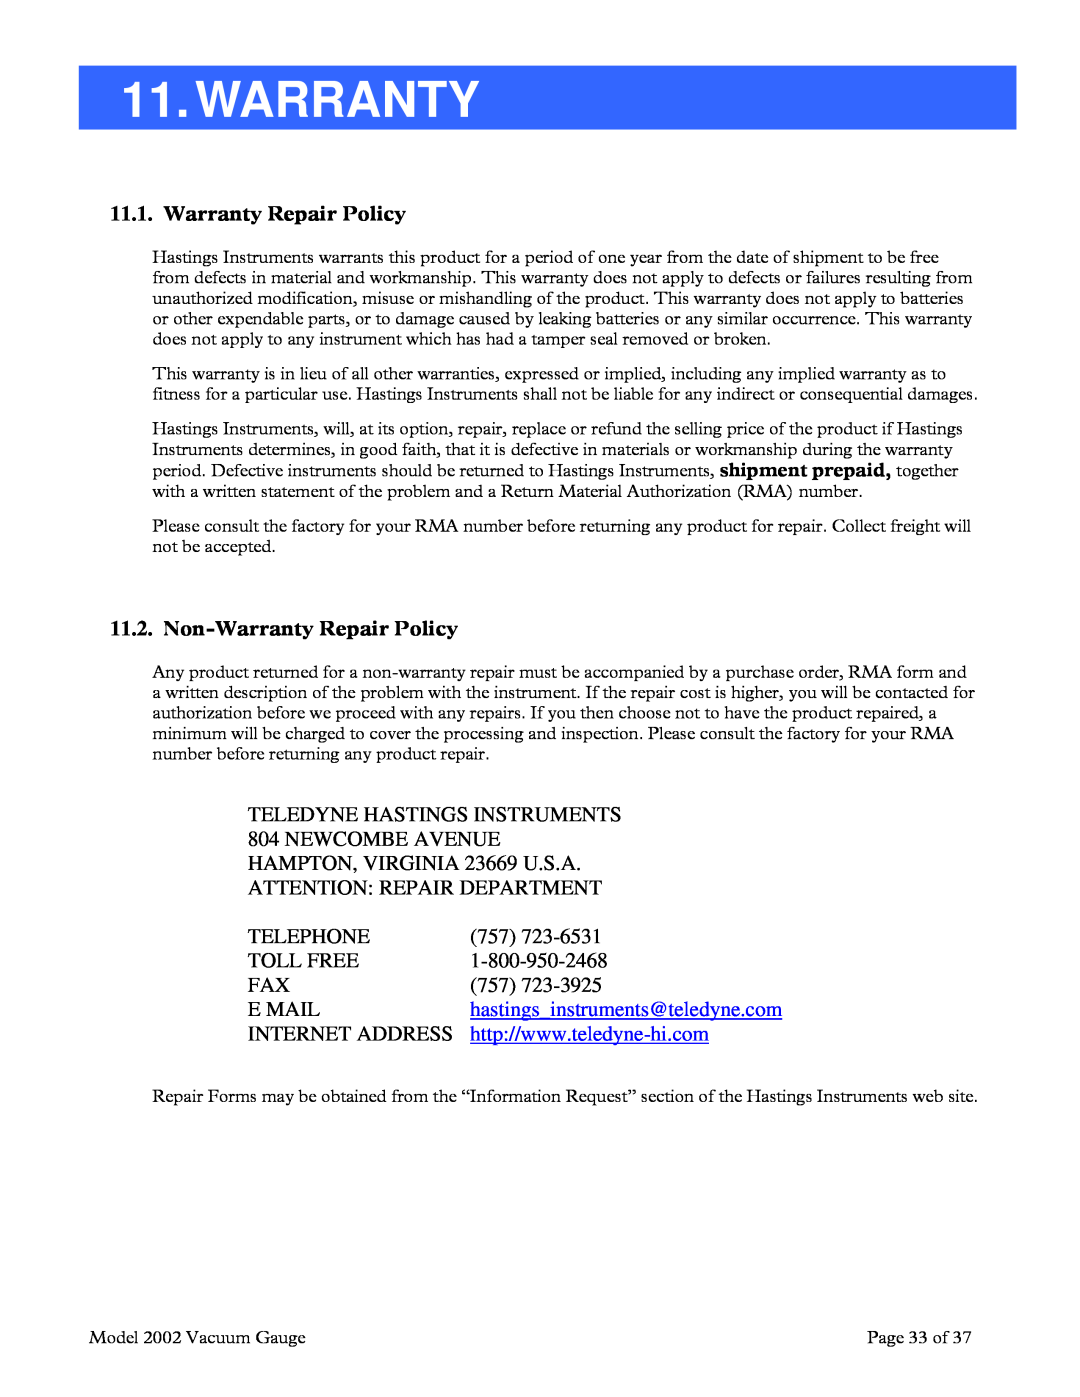 Teledyne 2002 instruction manual Warranty Repair Policy, Non-WarrantyRepair Policy 